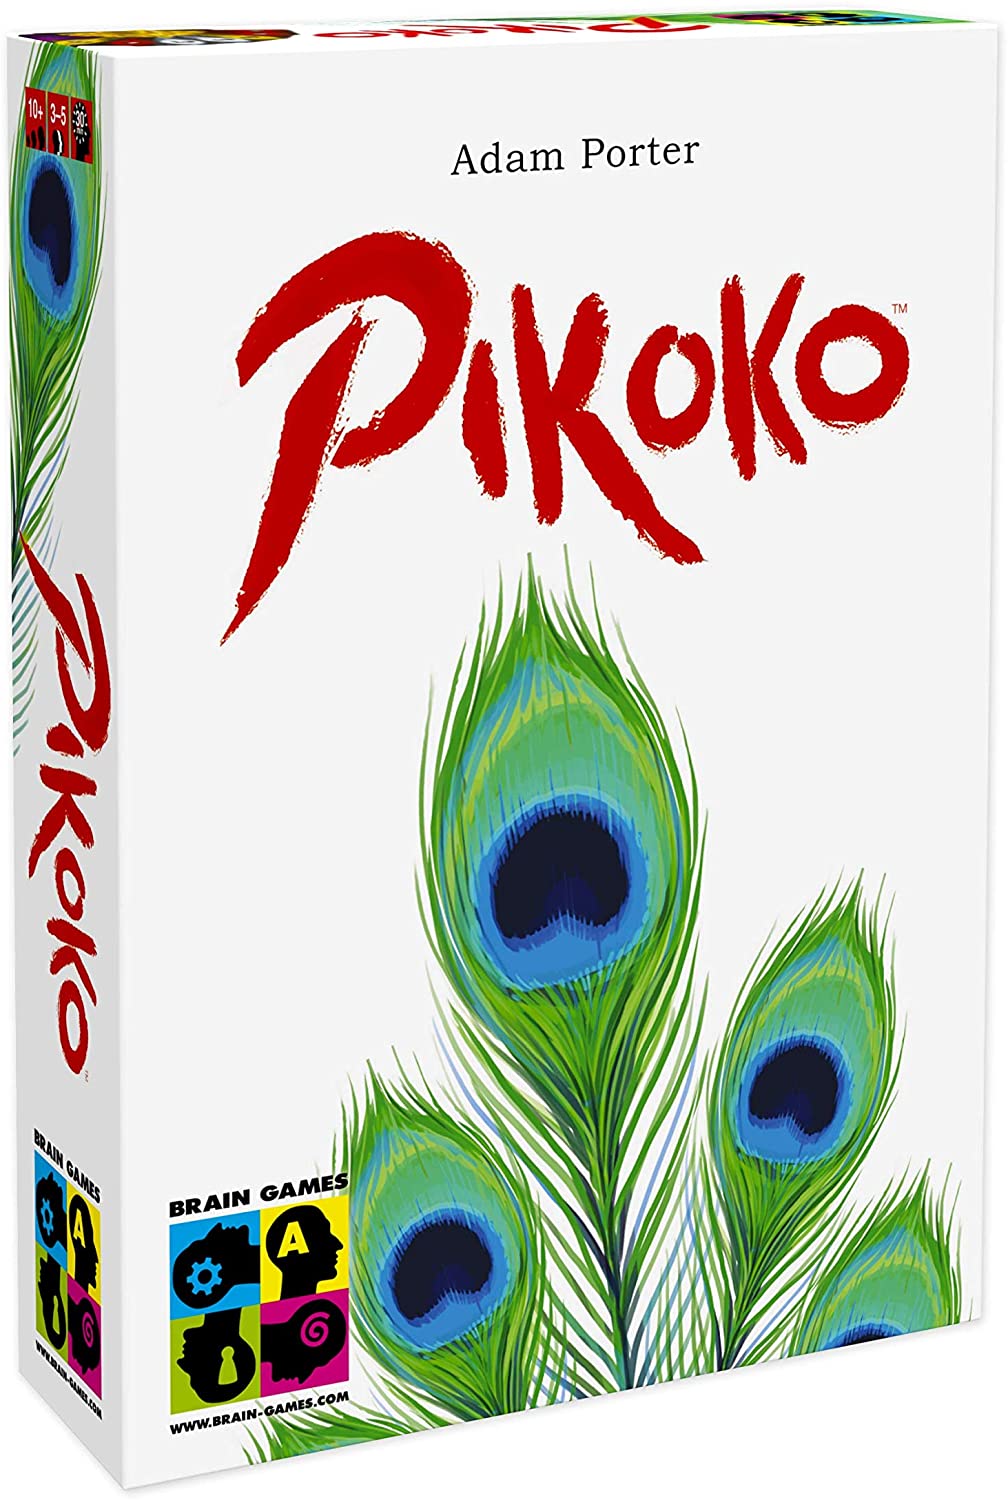 (BSG Certified USED) Pikoko